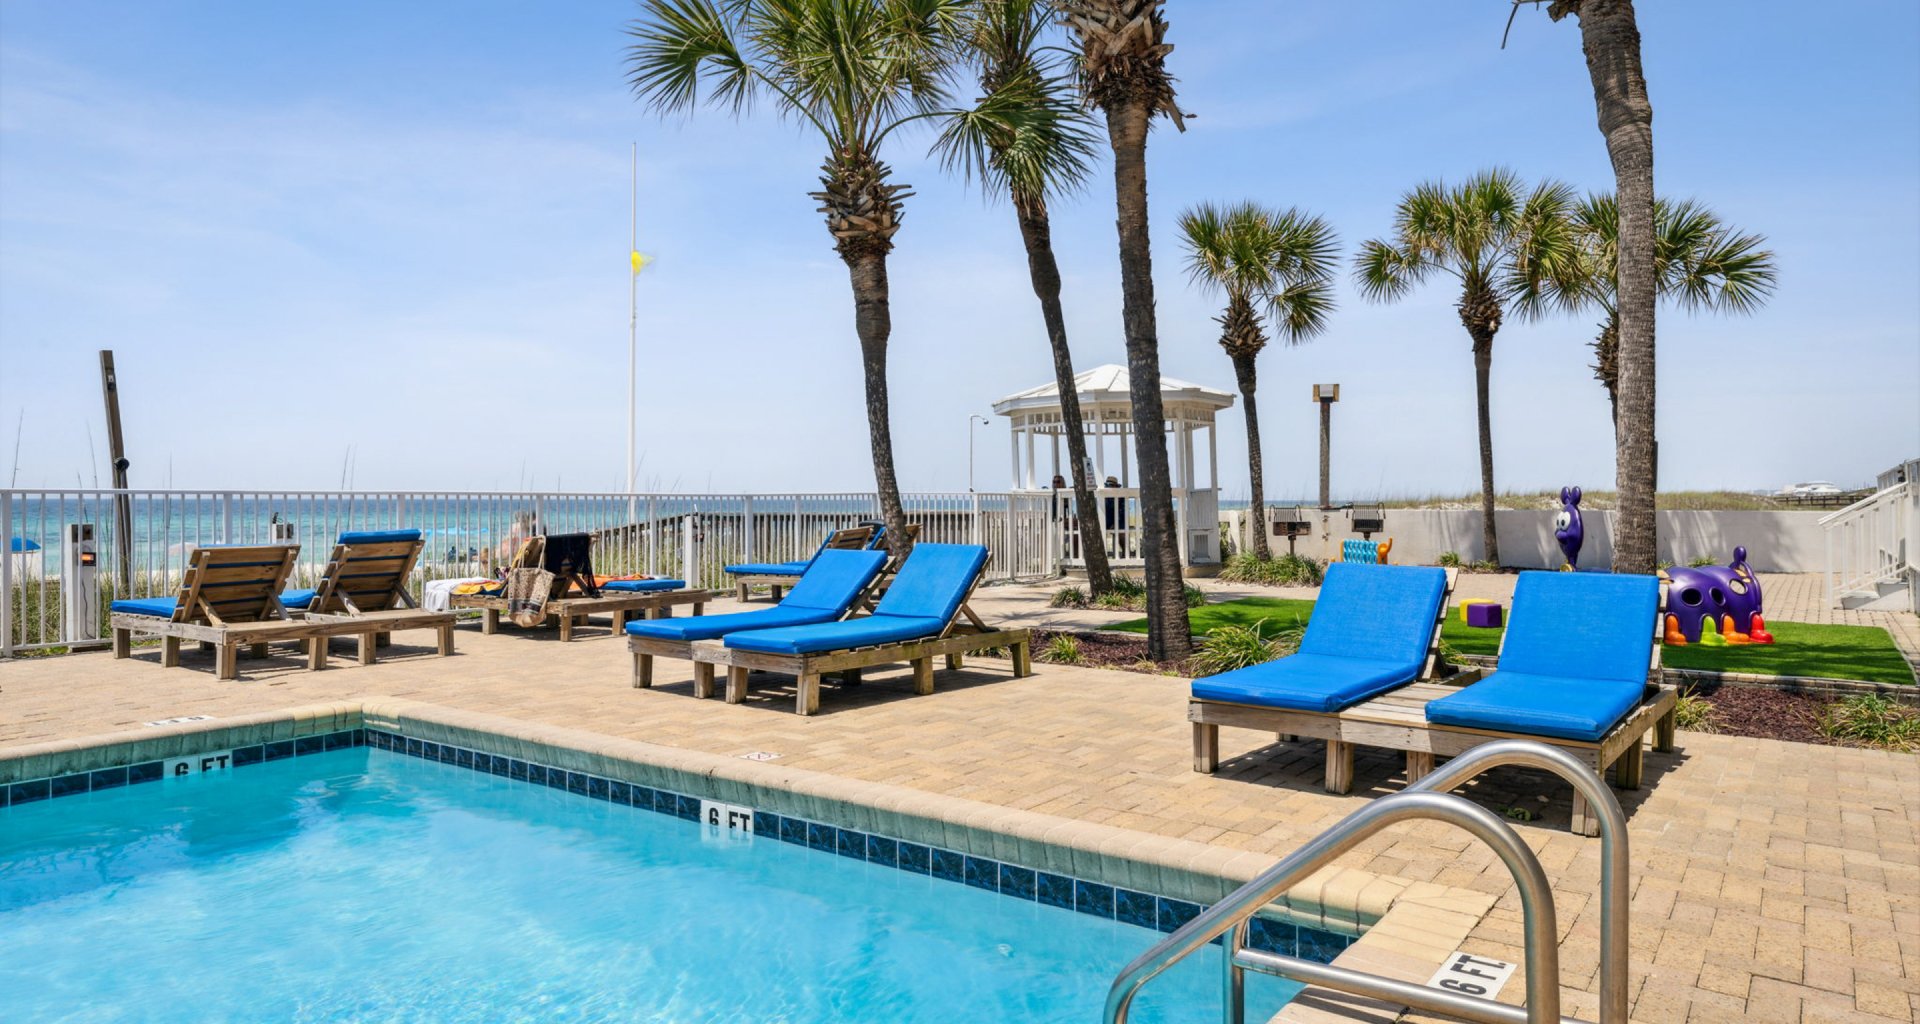 Luxurious Swimming Pool at Sugar Sands Beachfront Hotel, Florida